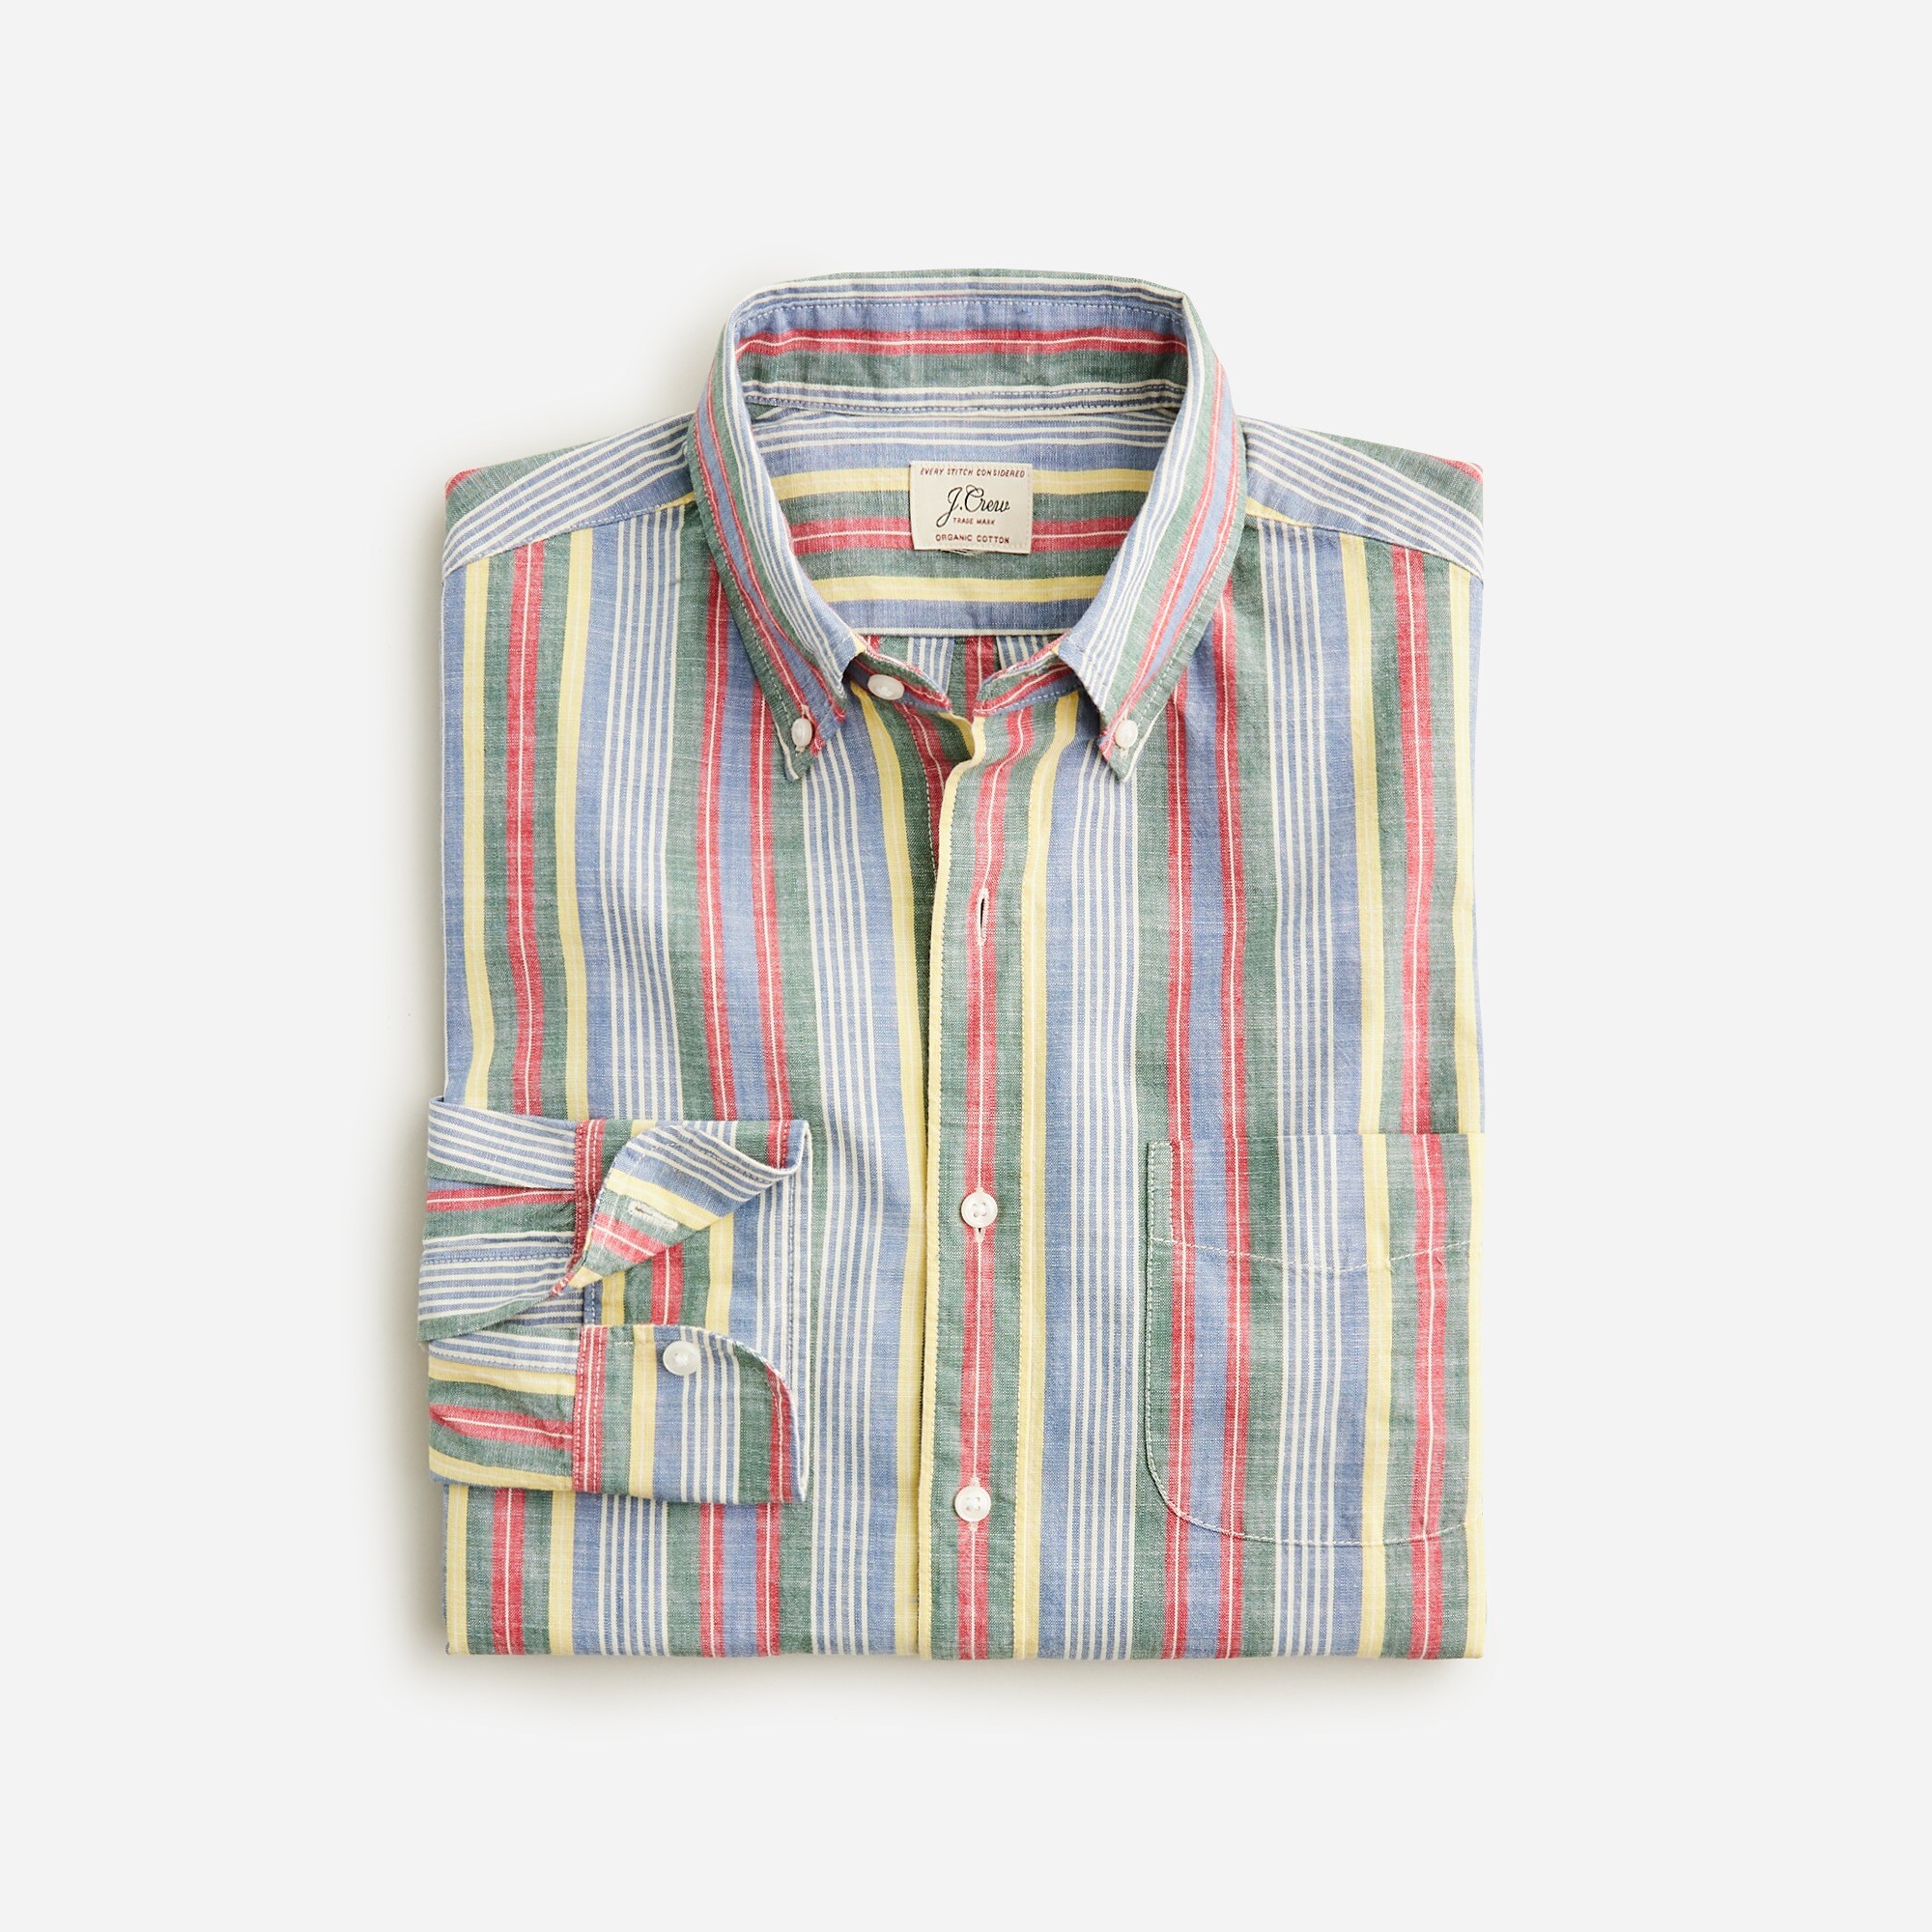  Organic cotton indigo chambray shirt in stripe